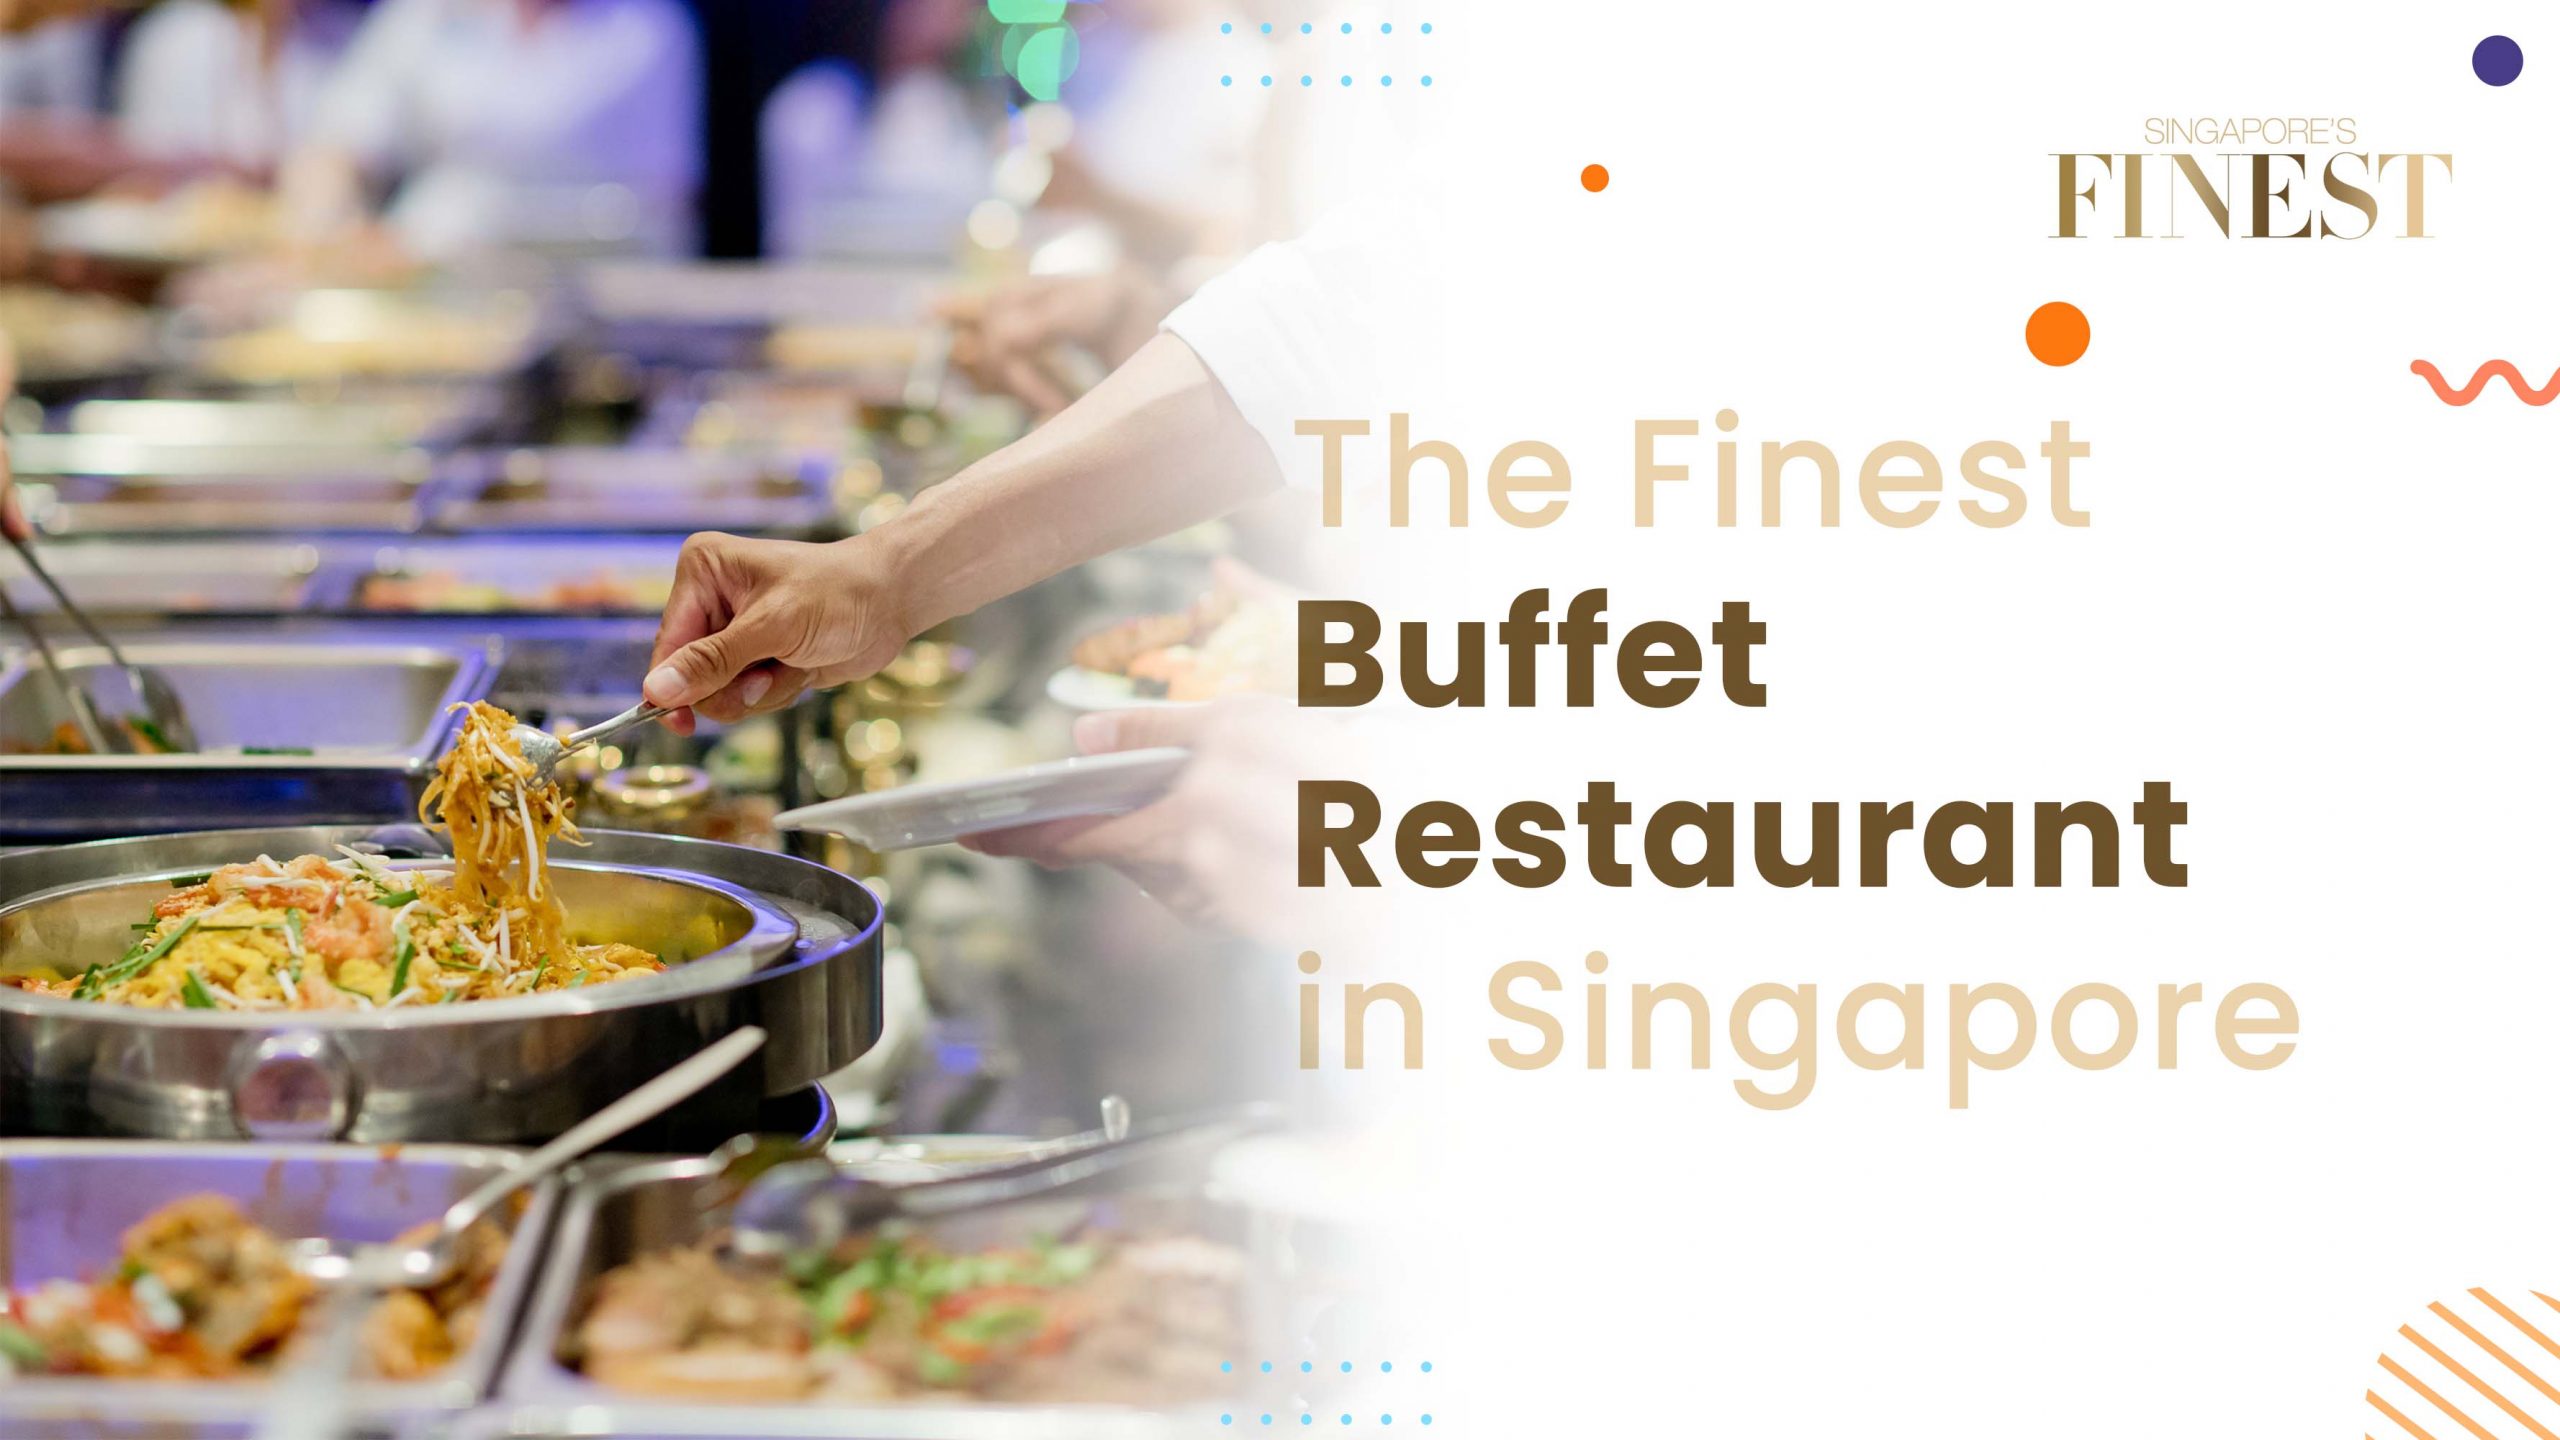 Best Buffet Restaurant in Singapore